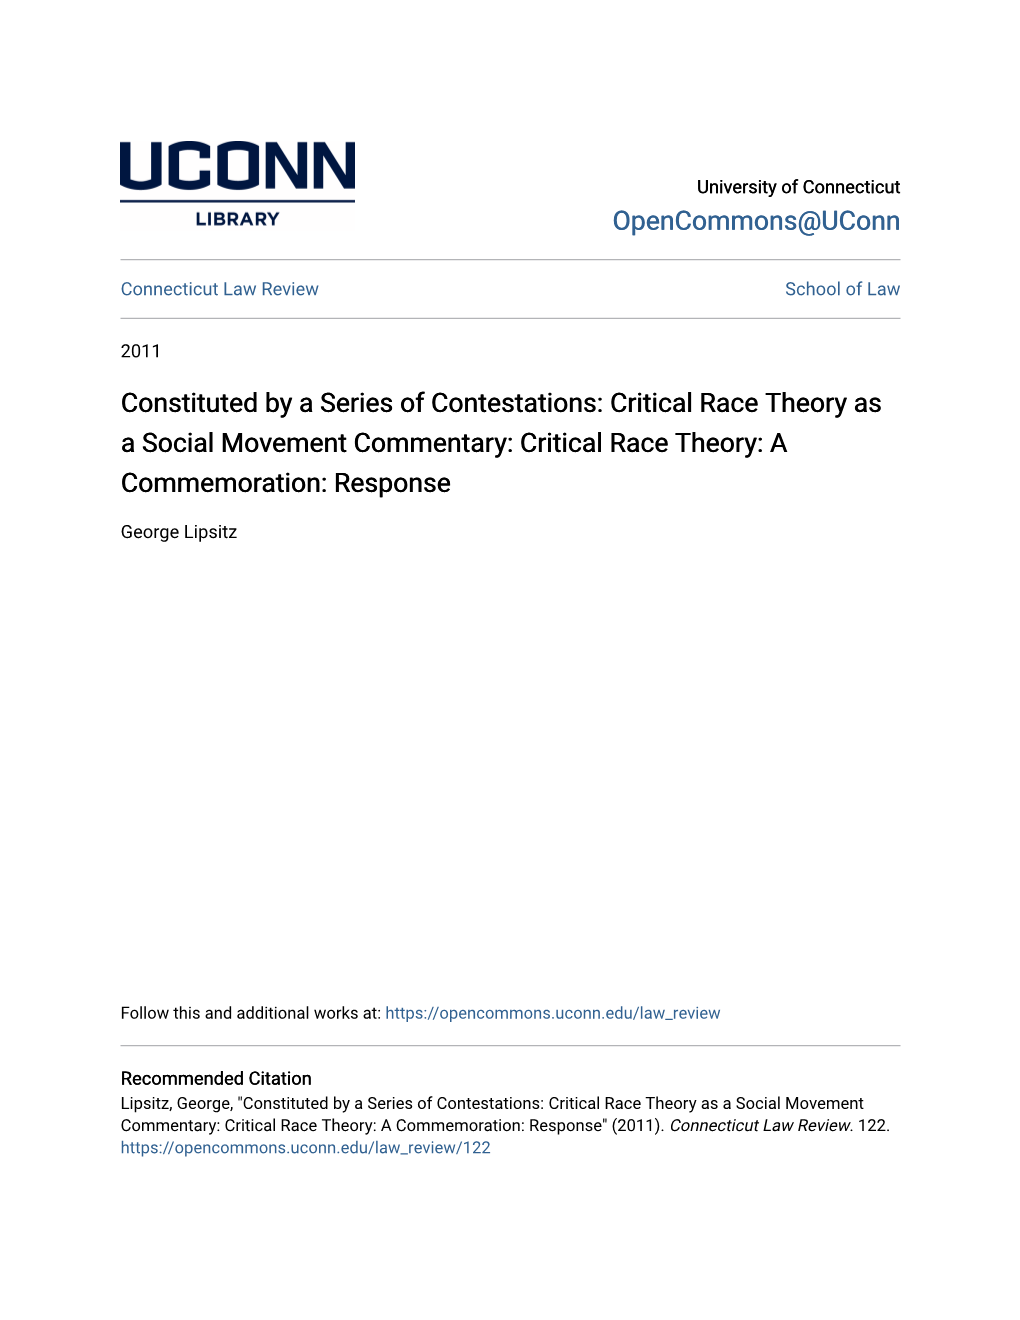 Critical Race Theory As a Social Movement Commentary: Critical Race Theory: a Commemoration: Response